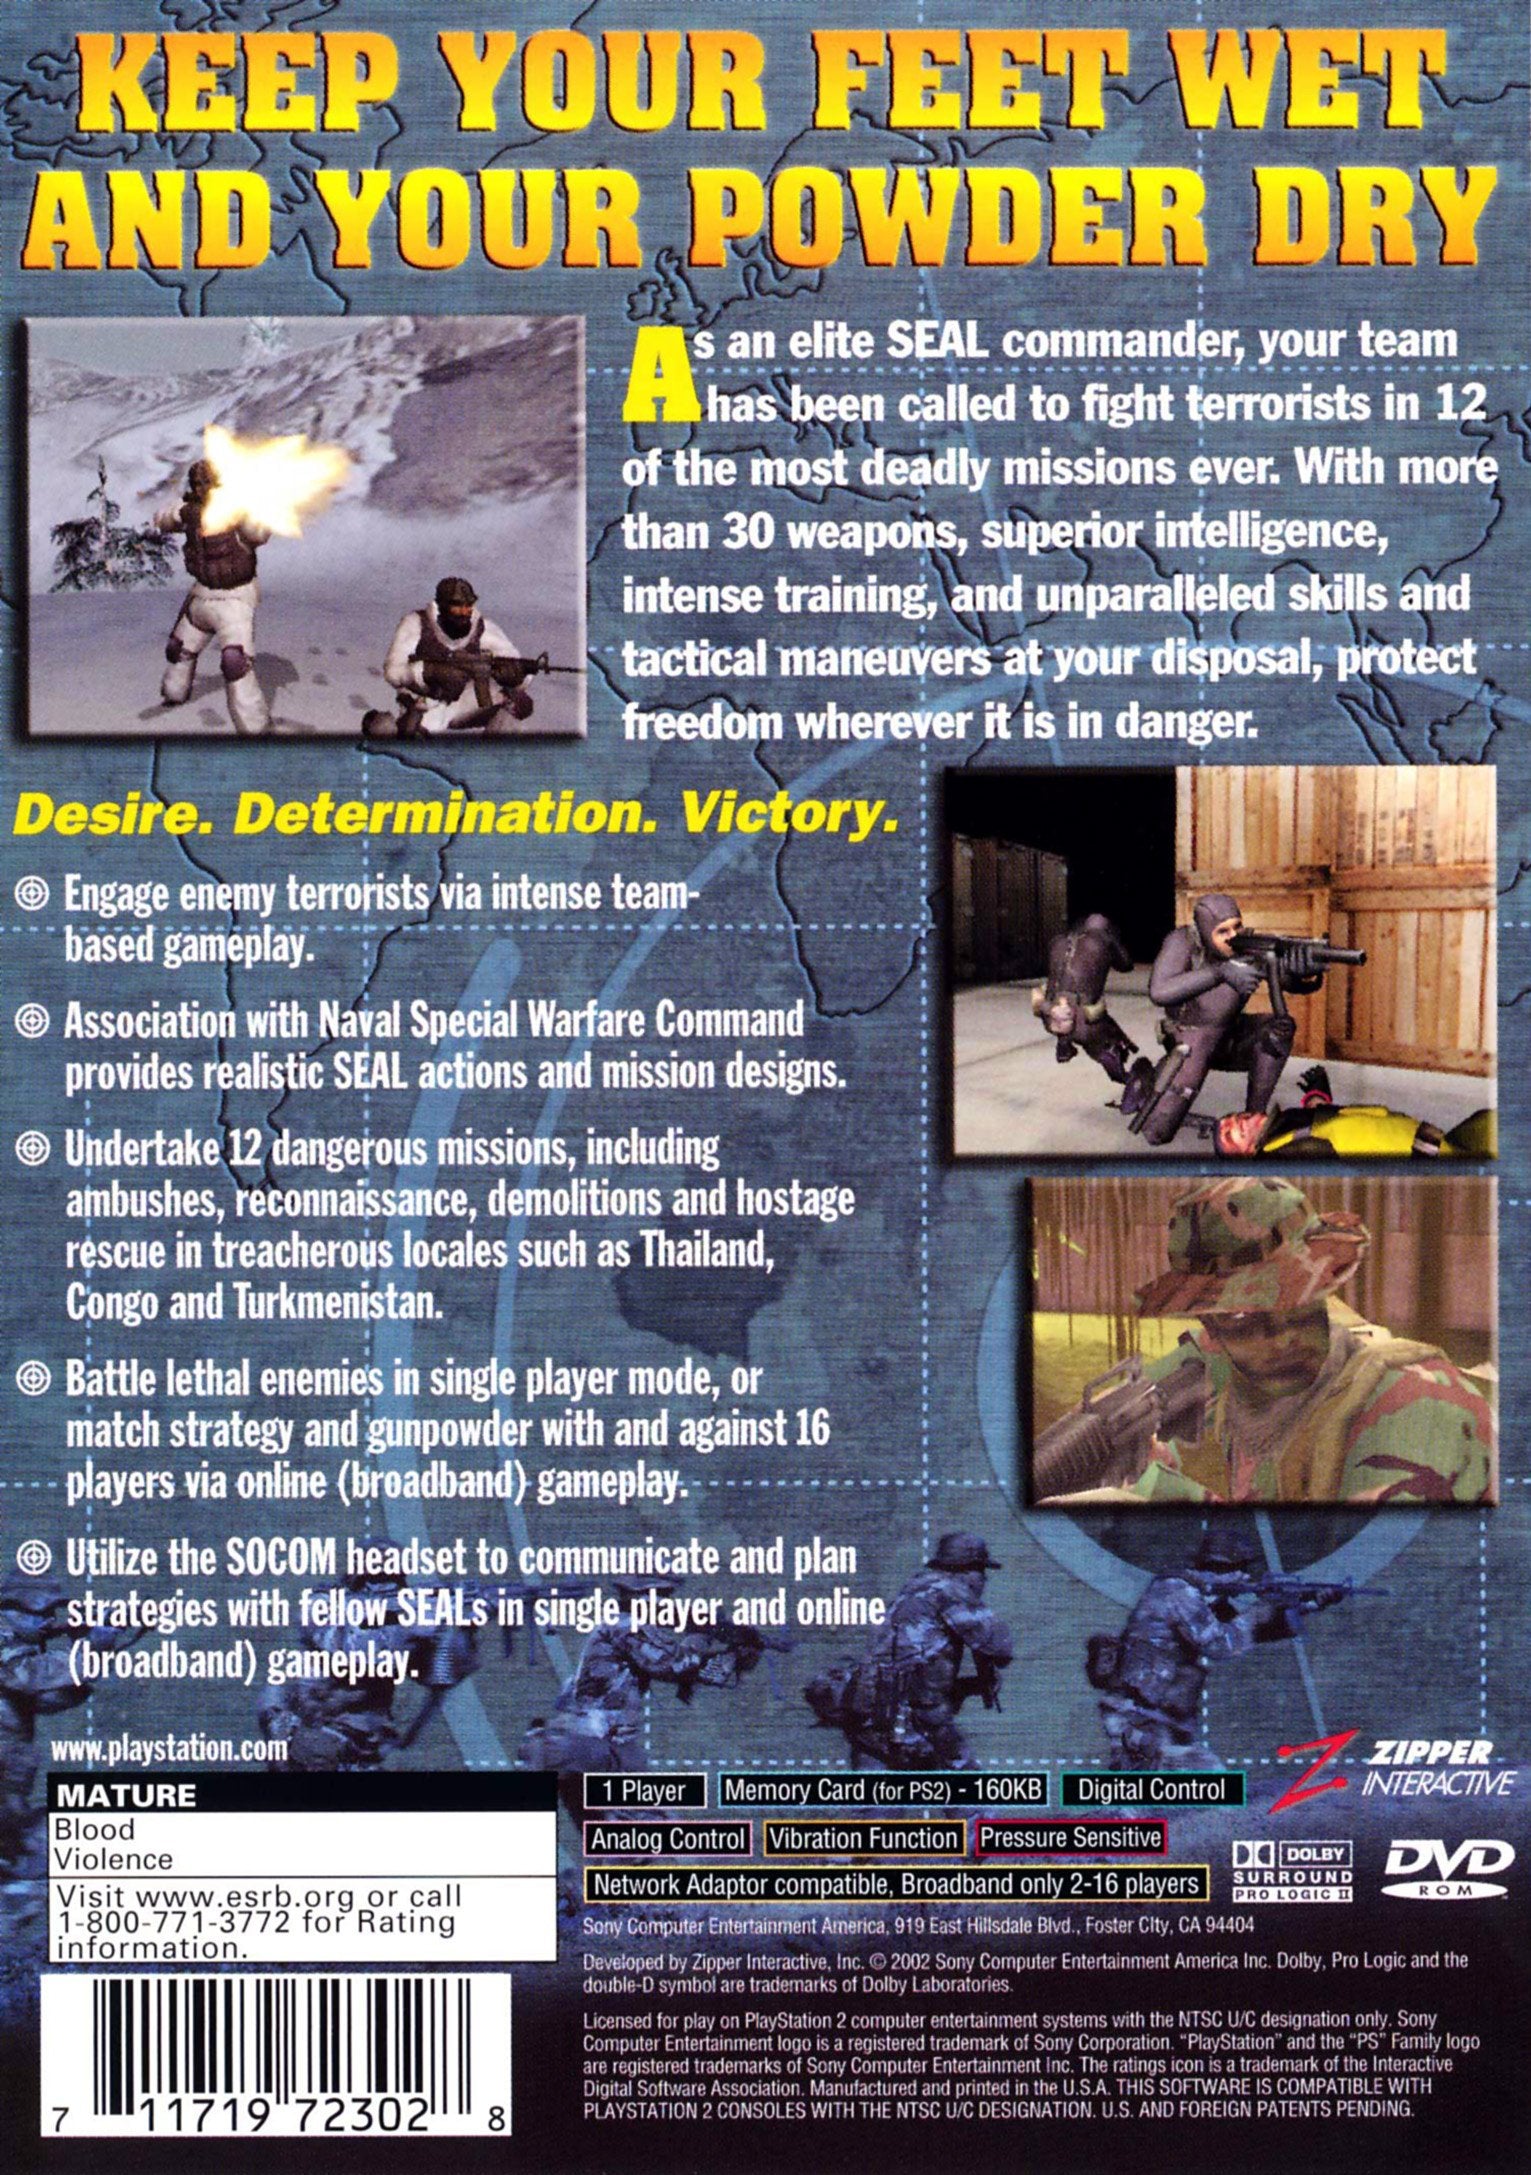 SOCOM: U.S. Navy SEALs (Greatest Hits) - PlayStation 2 (PS2) Game